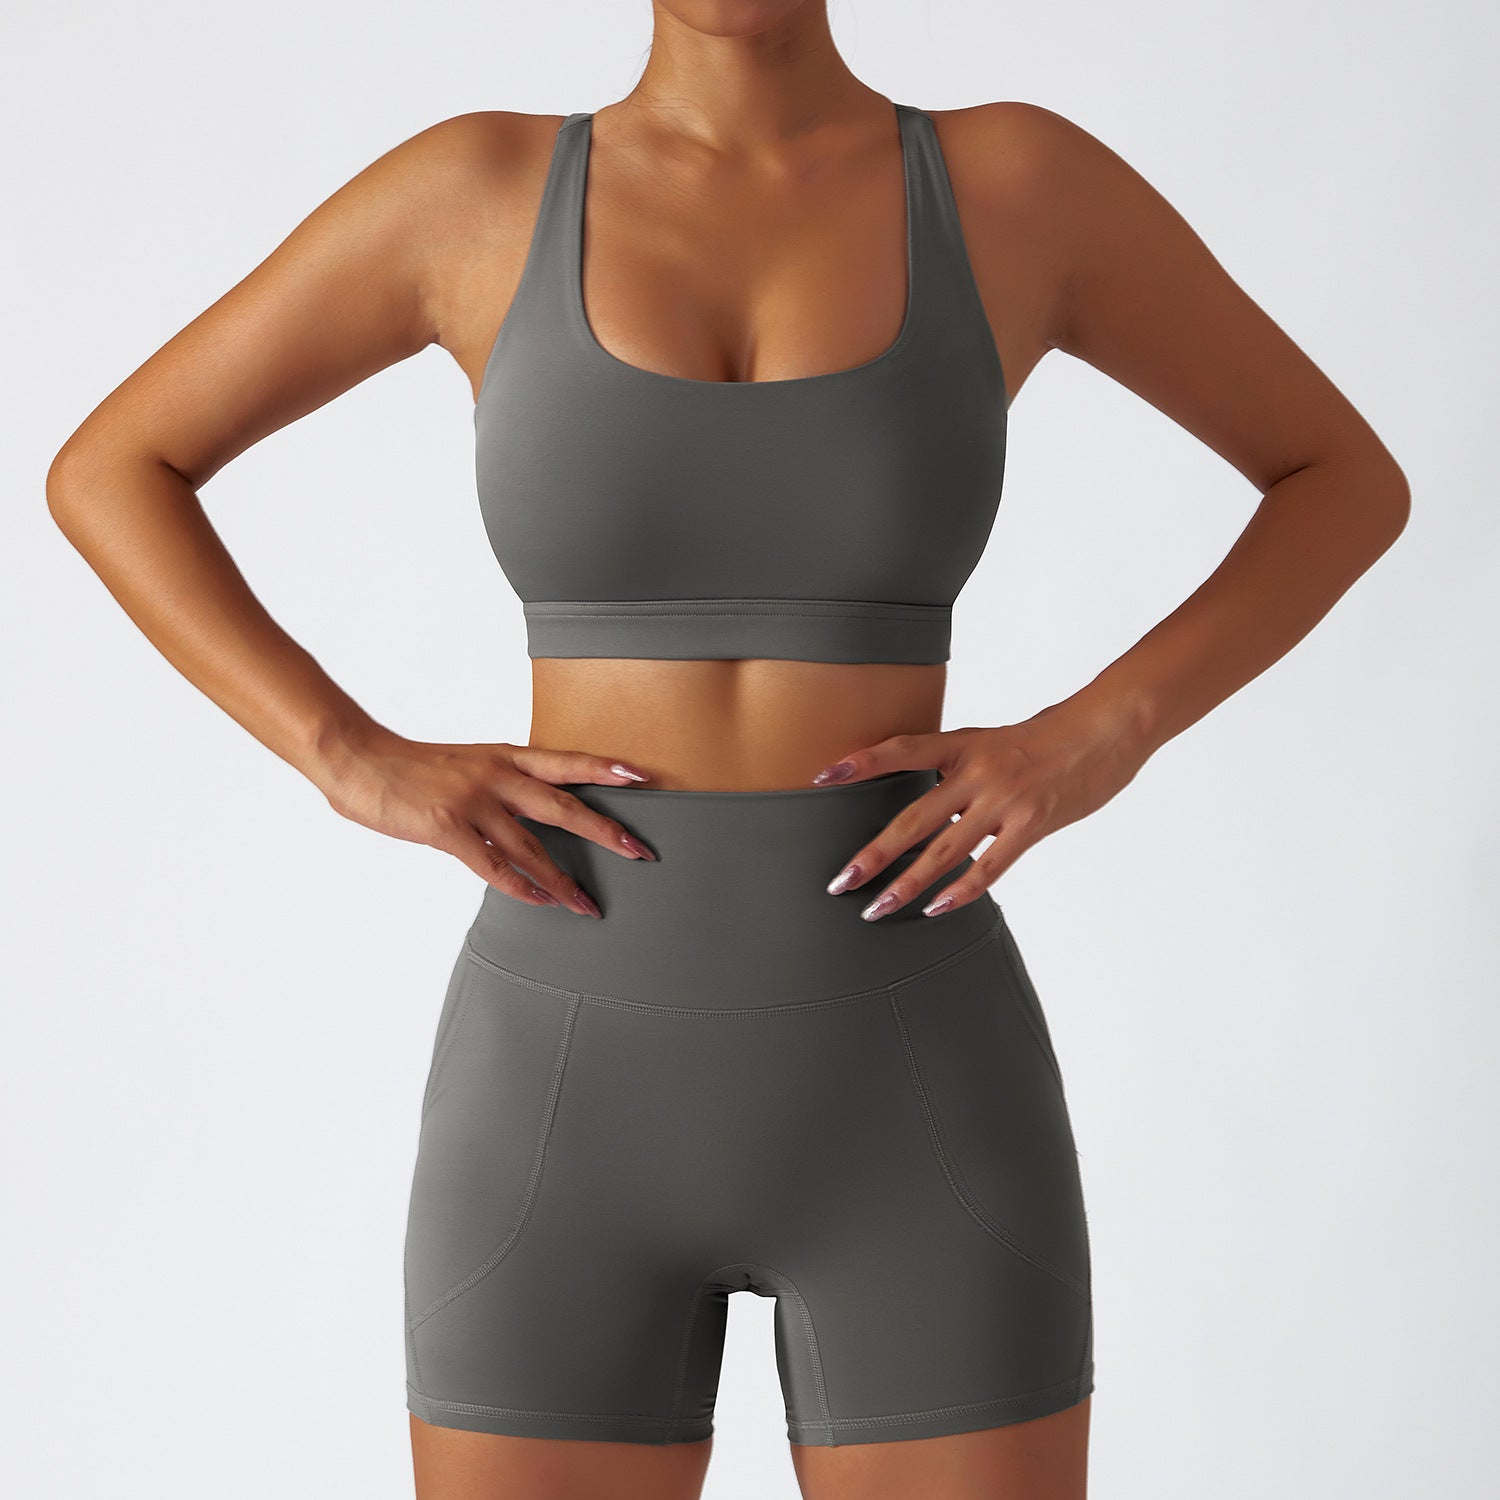 breathable waist-hip short workout sets